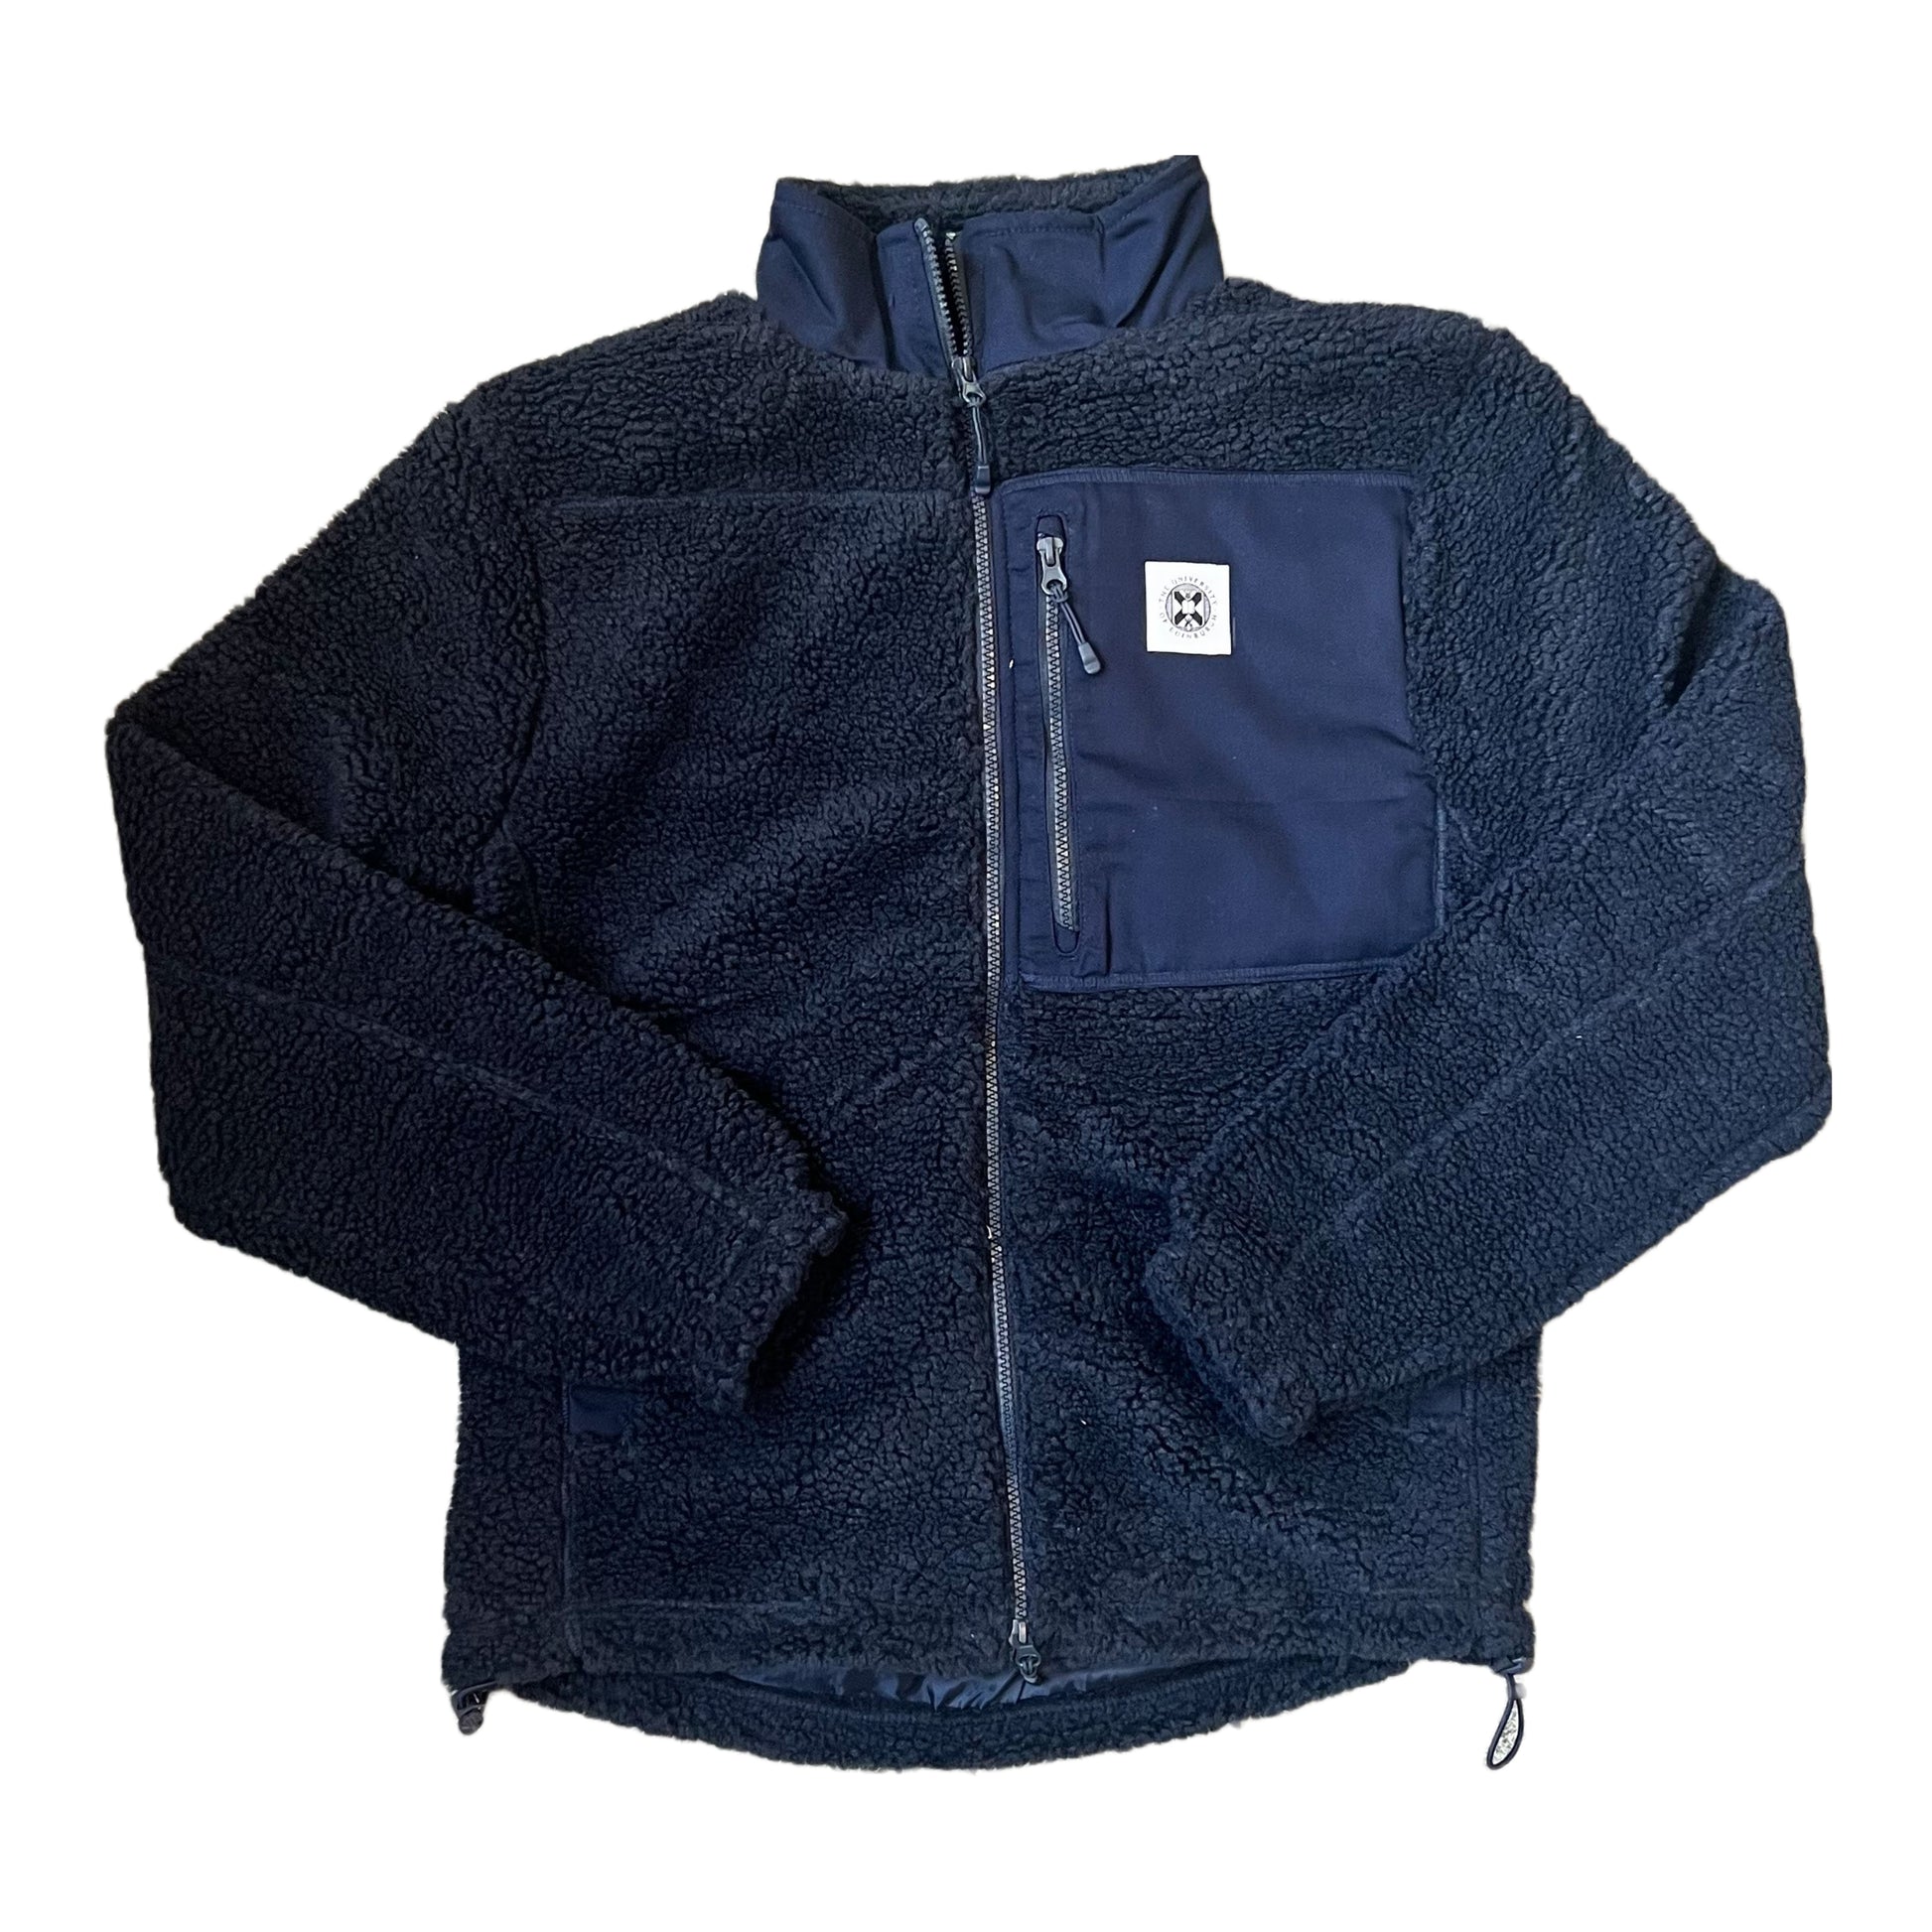 Navy fleece sherpa jacket with university crest label stitched on pocket.